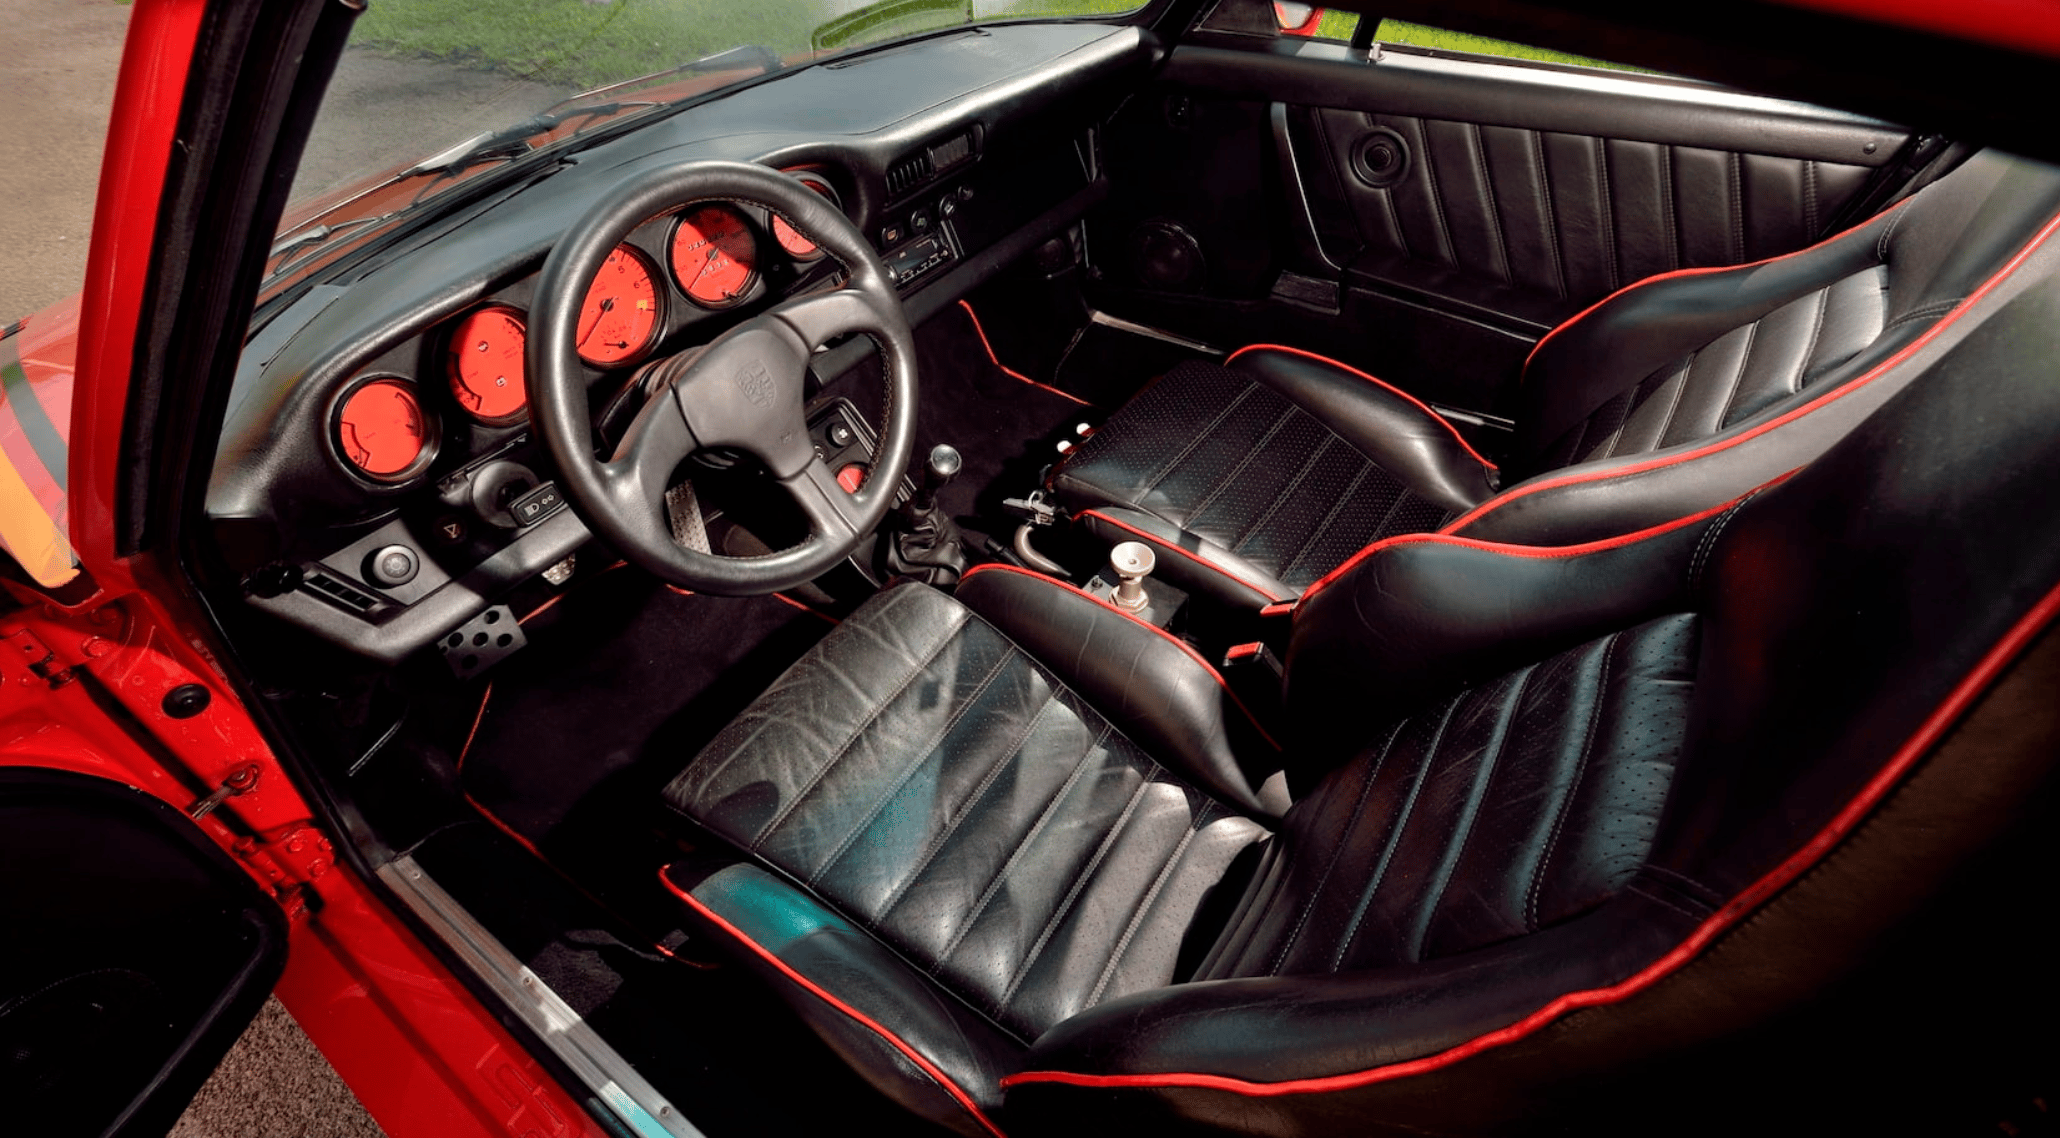 1982 911 Turbo DP 1 935, Ruf BTR engine, speed record car for Car & Driver Magazine